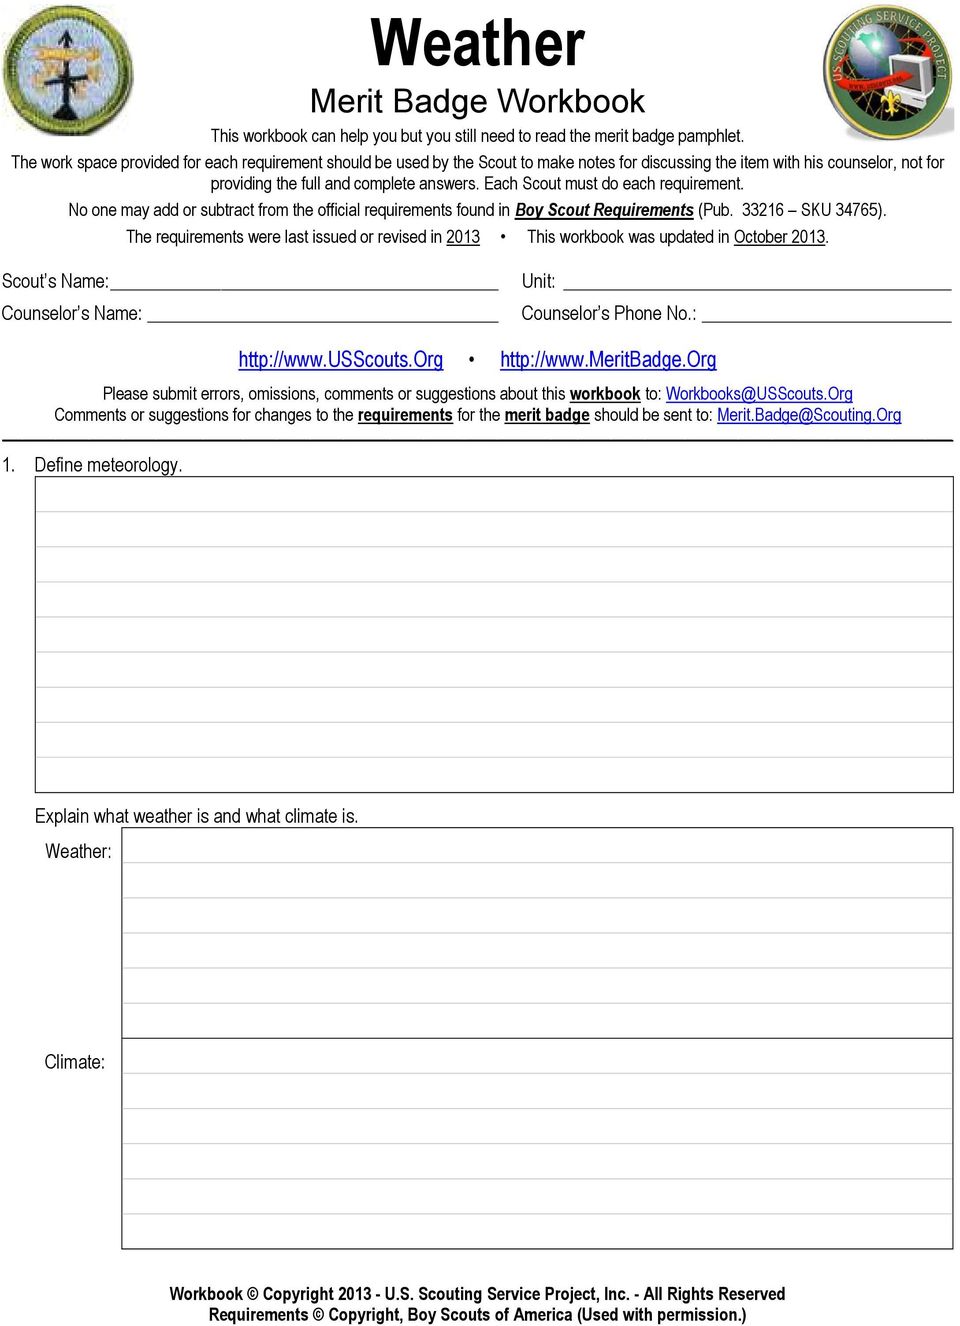 Weather Merit Badge Workbook - PDF Free Download With Weather Merit Badge Worksheet